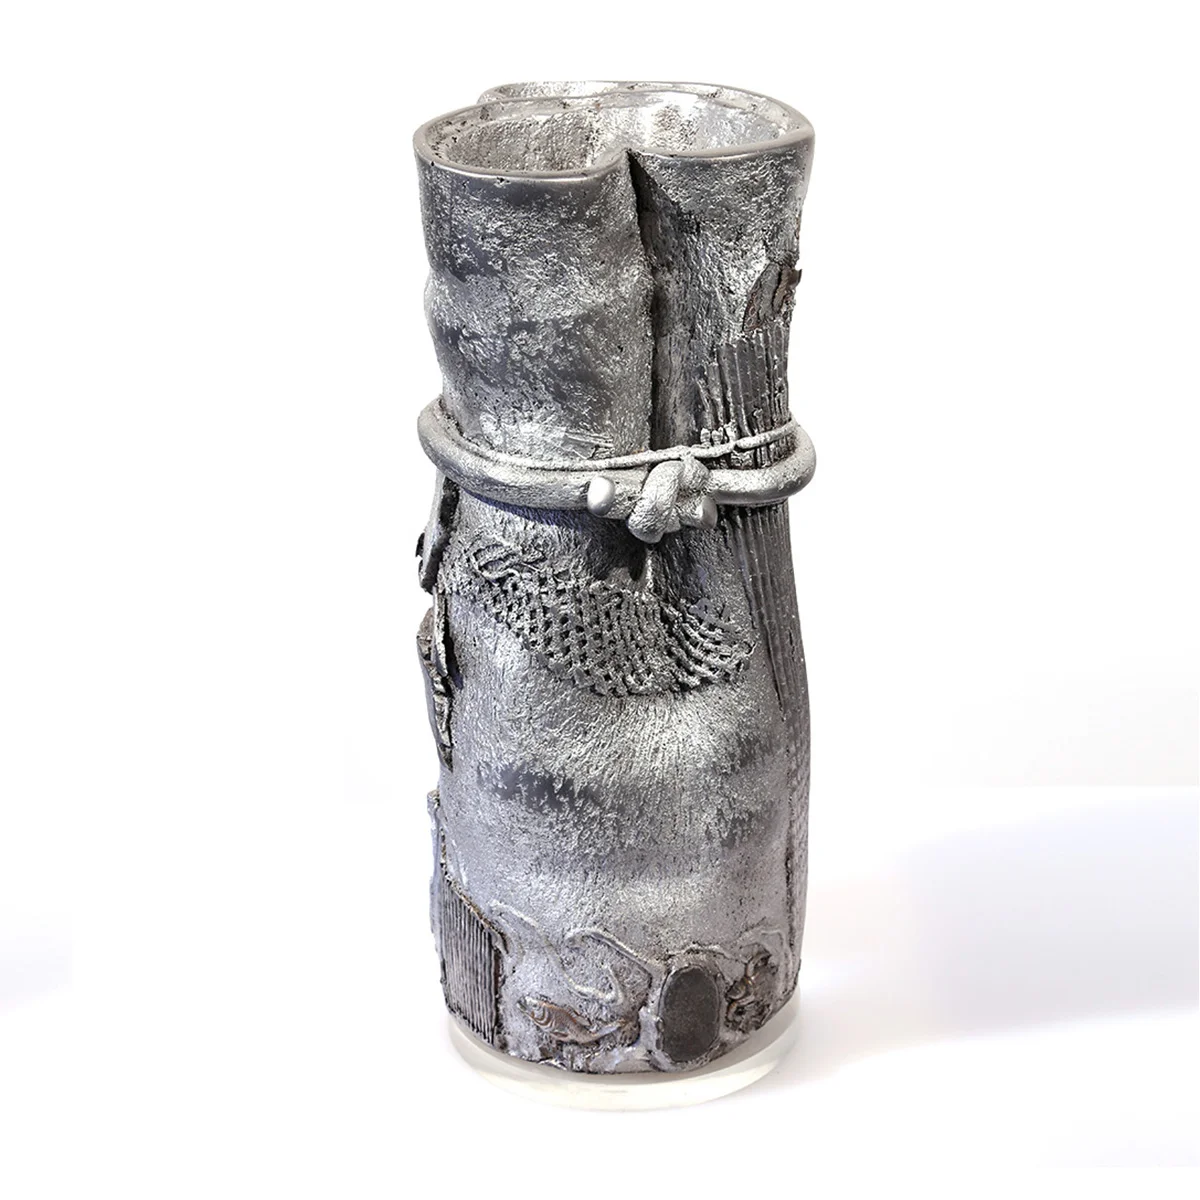 Vase Band | aluminum | 15 x 7 x 7 inches -Knot-Vases- Sand-casted- aluminum -sculpture -by -Mel -Hantz